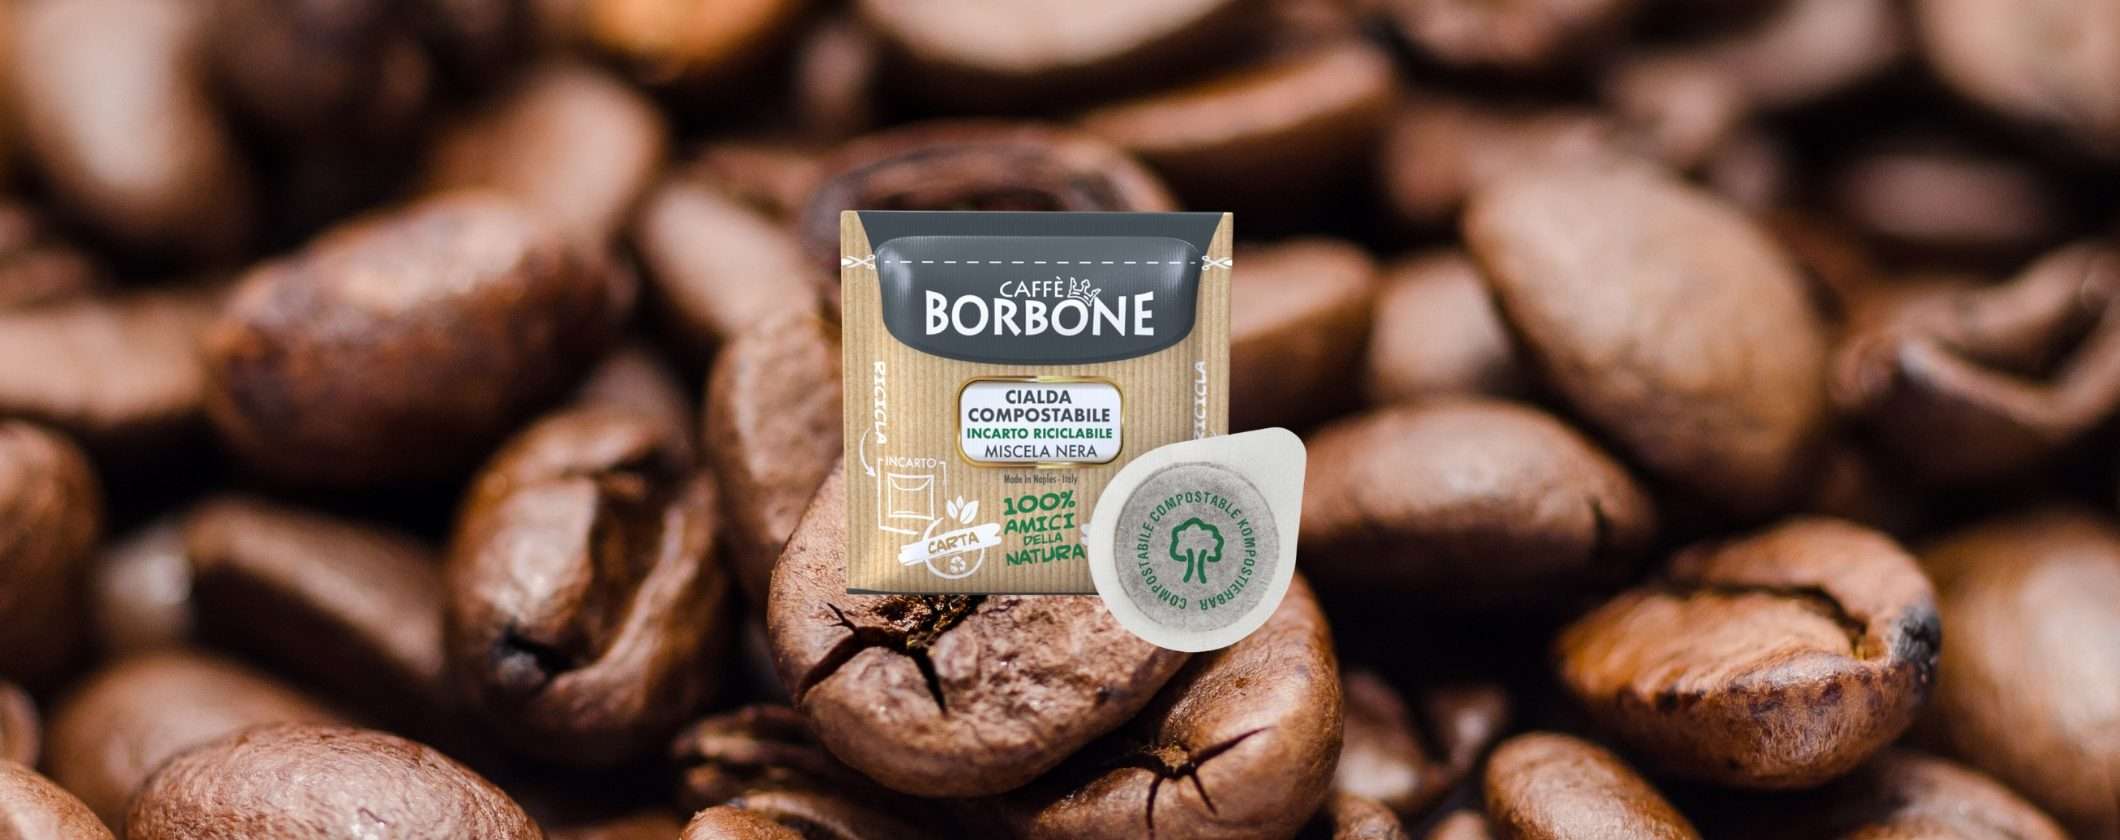 Caffè Borbone: 300 Cialde a soli 40€ su eBay, SUPER AFFARE